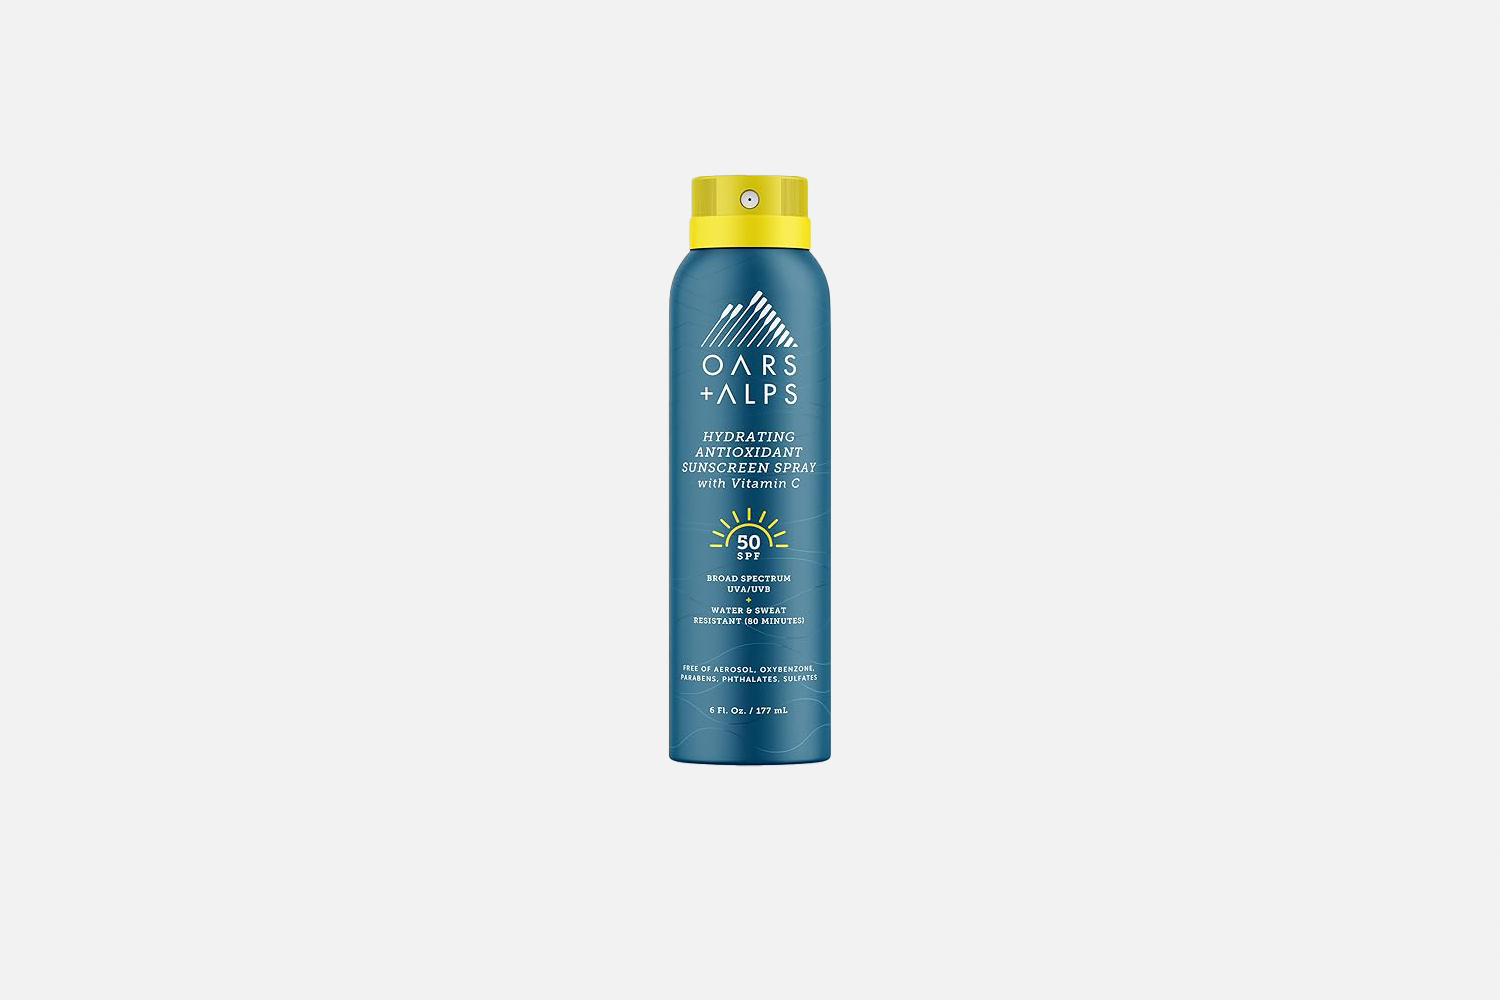 Oars + Alps Hydrating SPF 50 Sunscreen Spray with Vitamin C and Antioxidants